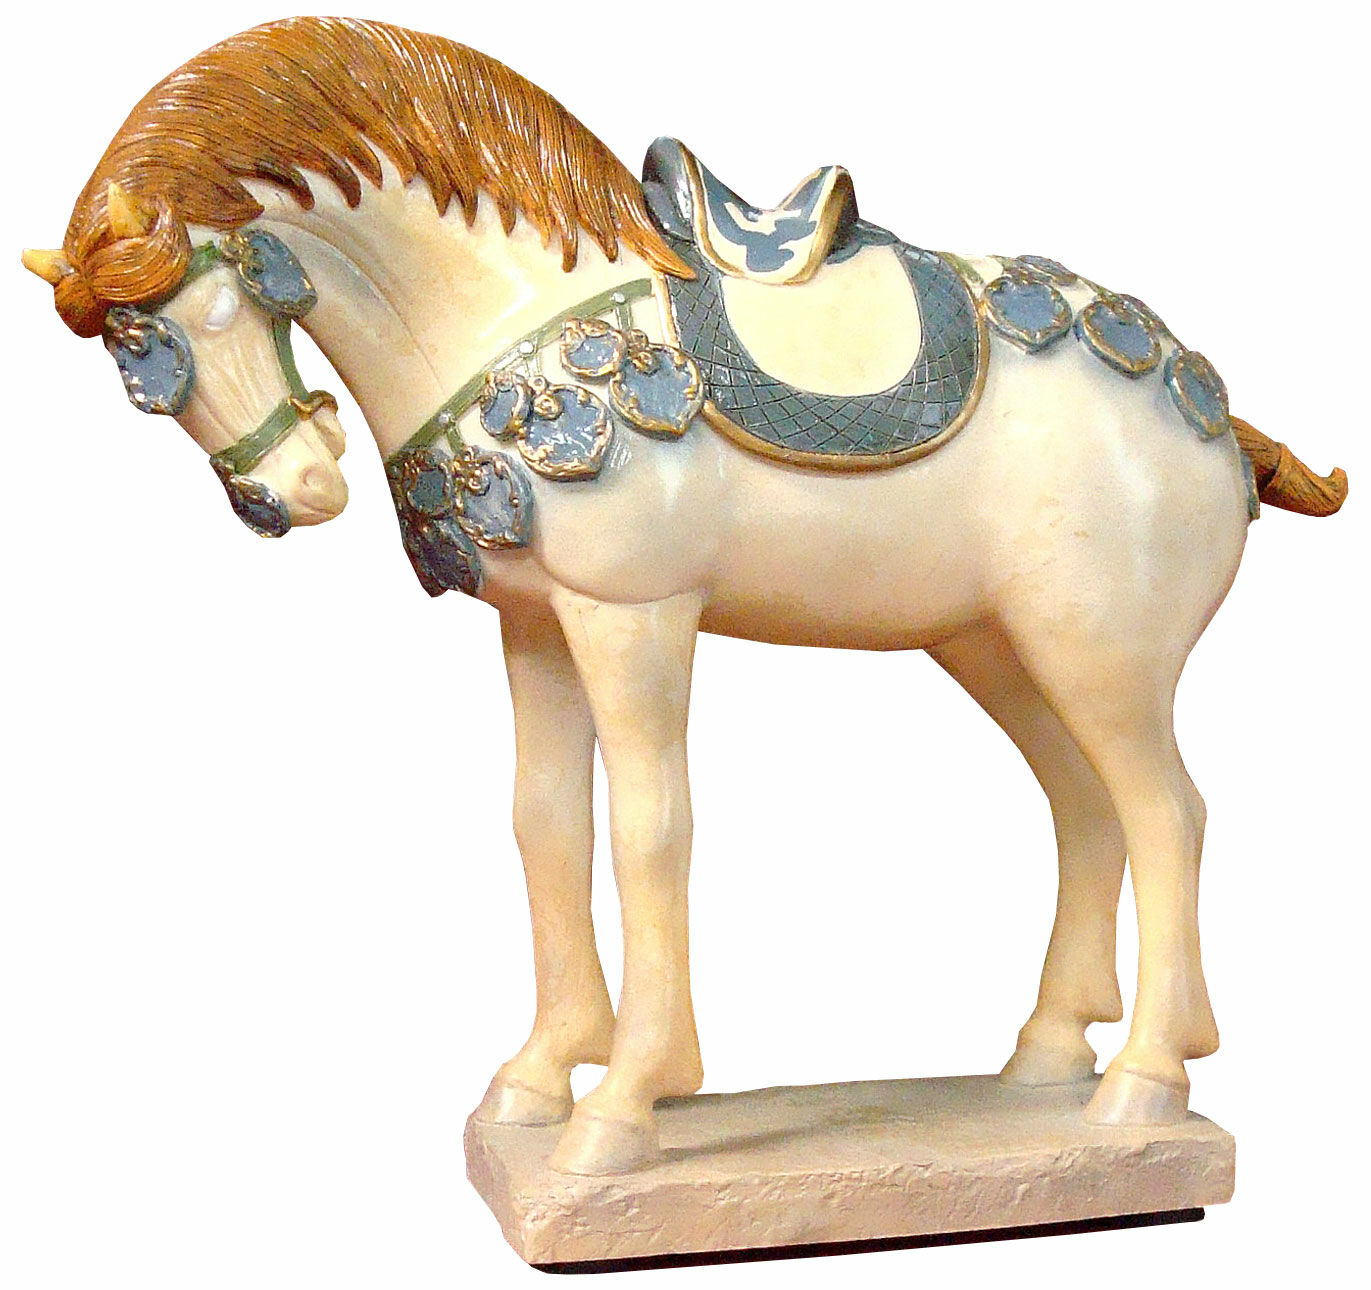 Sculpture "Tang Horse", cast